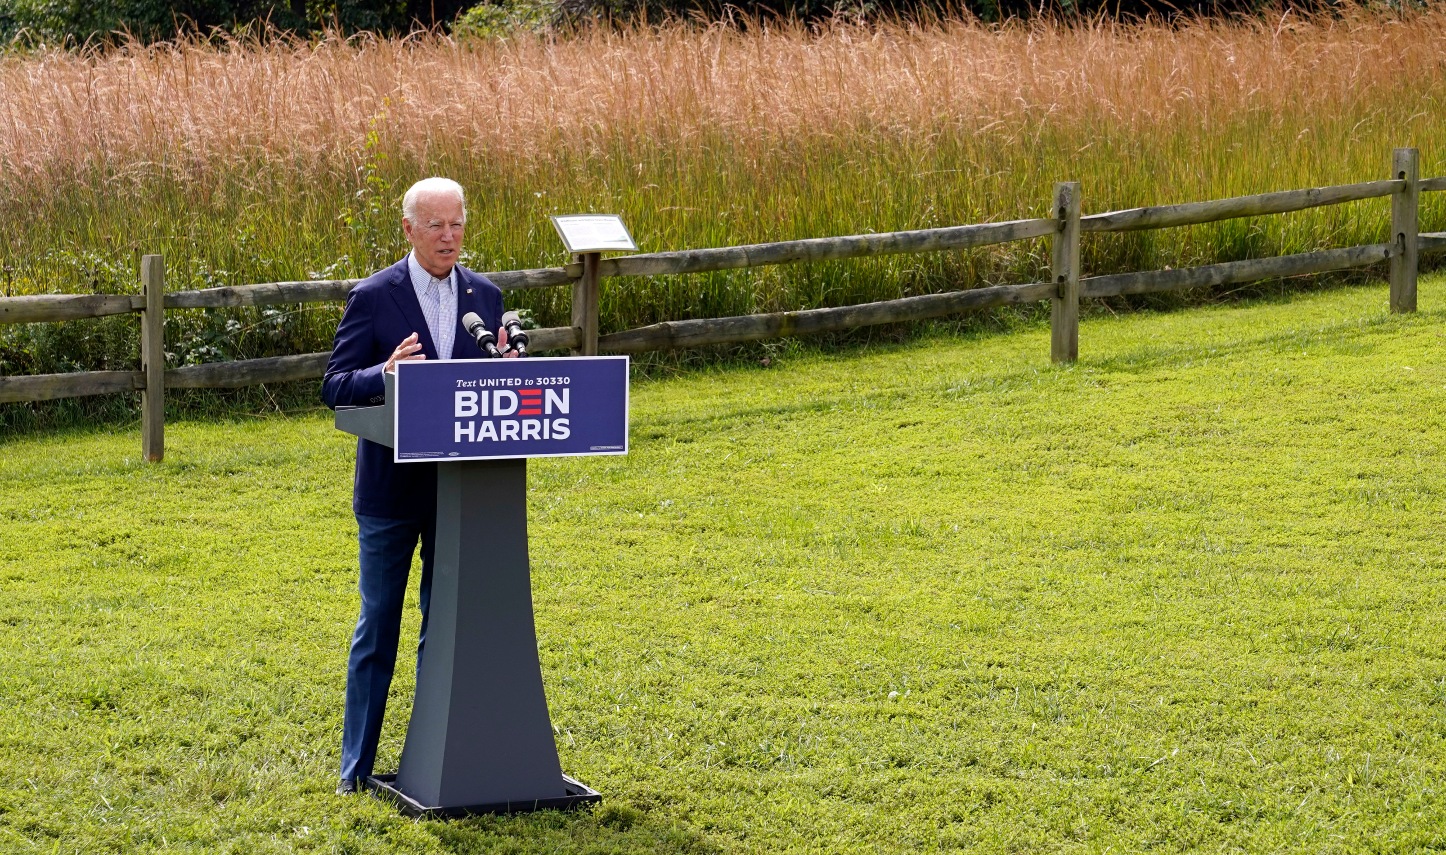 Joe Biden giving a speech from a podium in a grassy field in the sunshine.